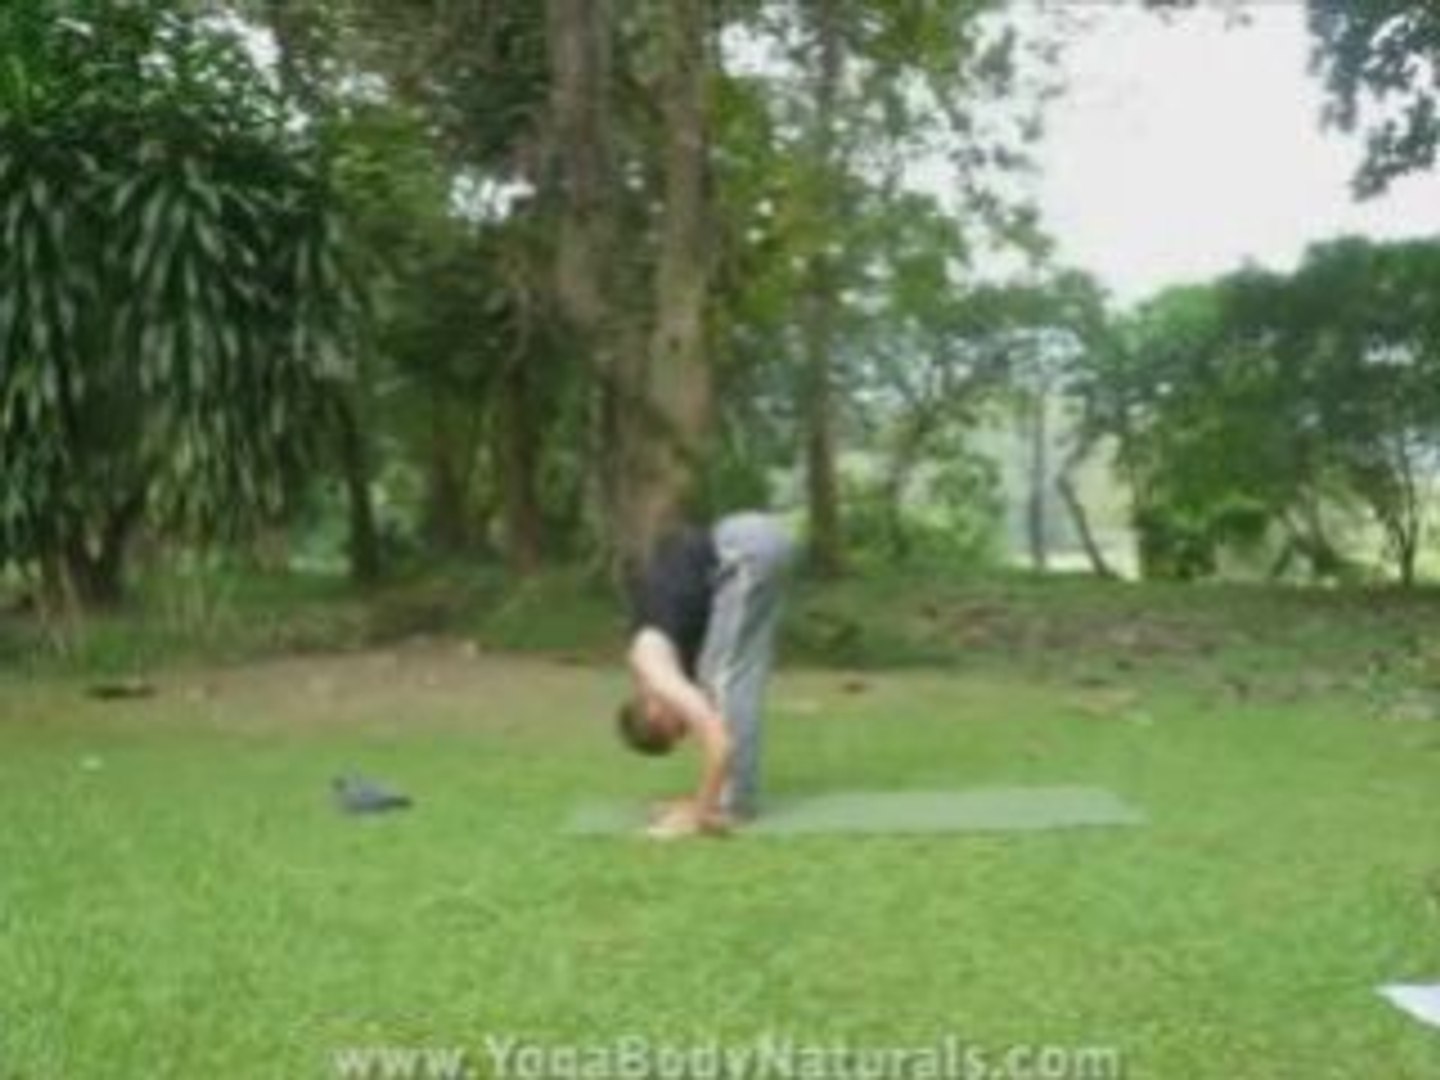 Daft YOGA: Yoga Video